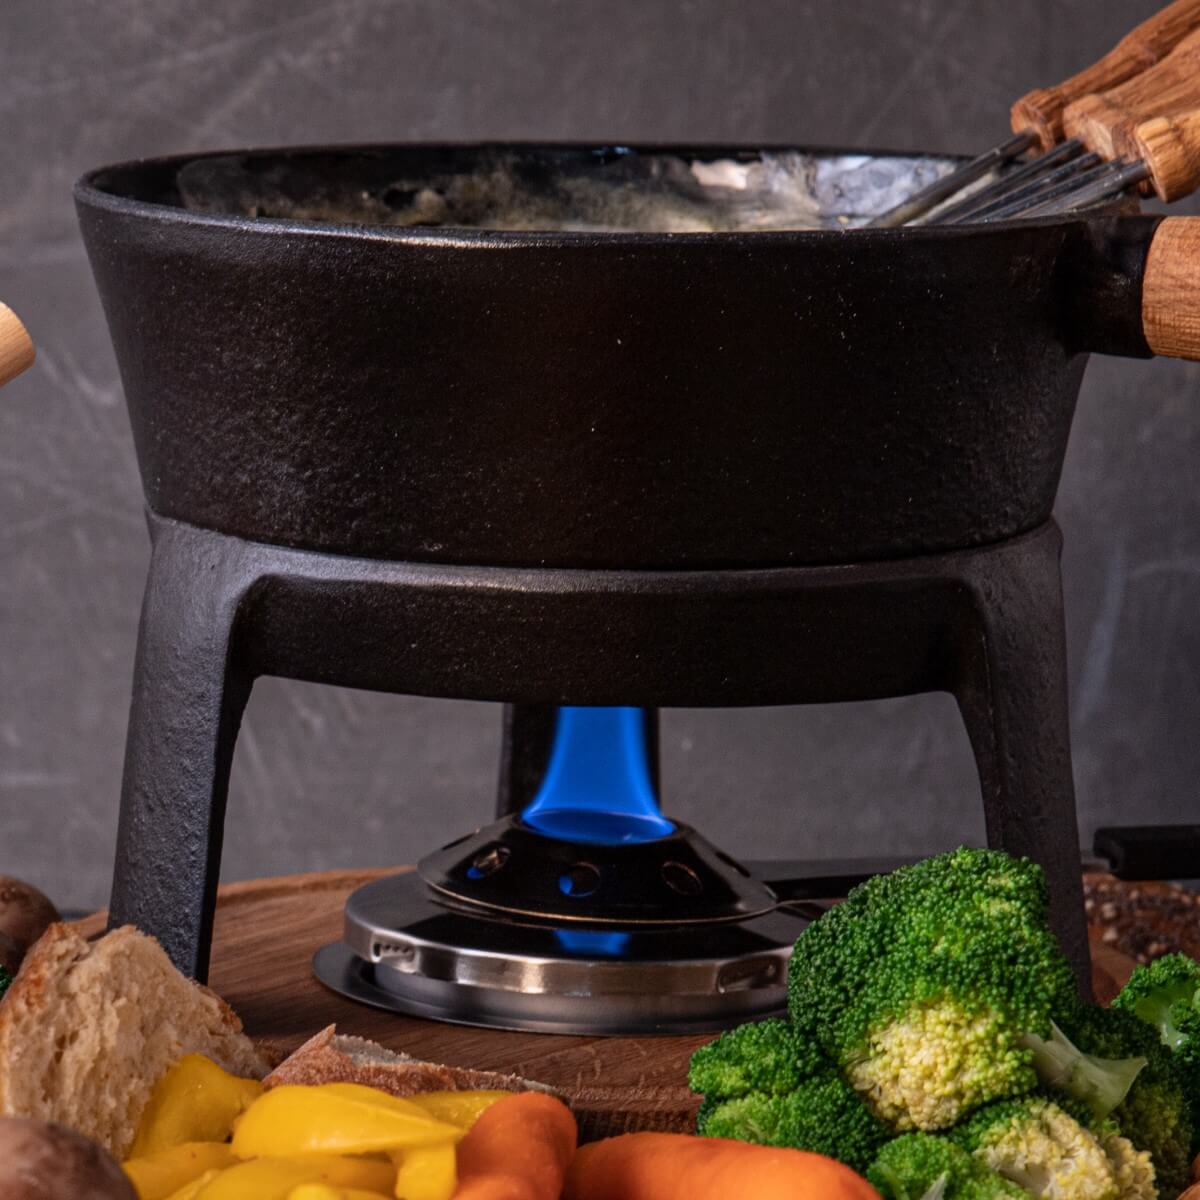 Boska fondue burner with flame control, 330310  Advantageously shopping at